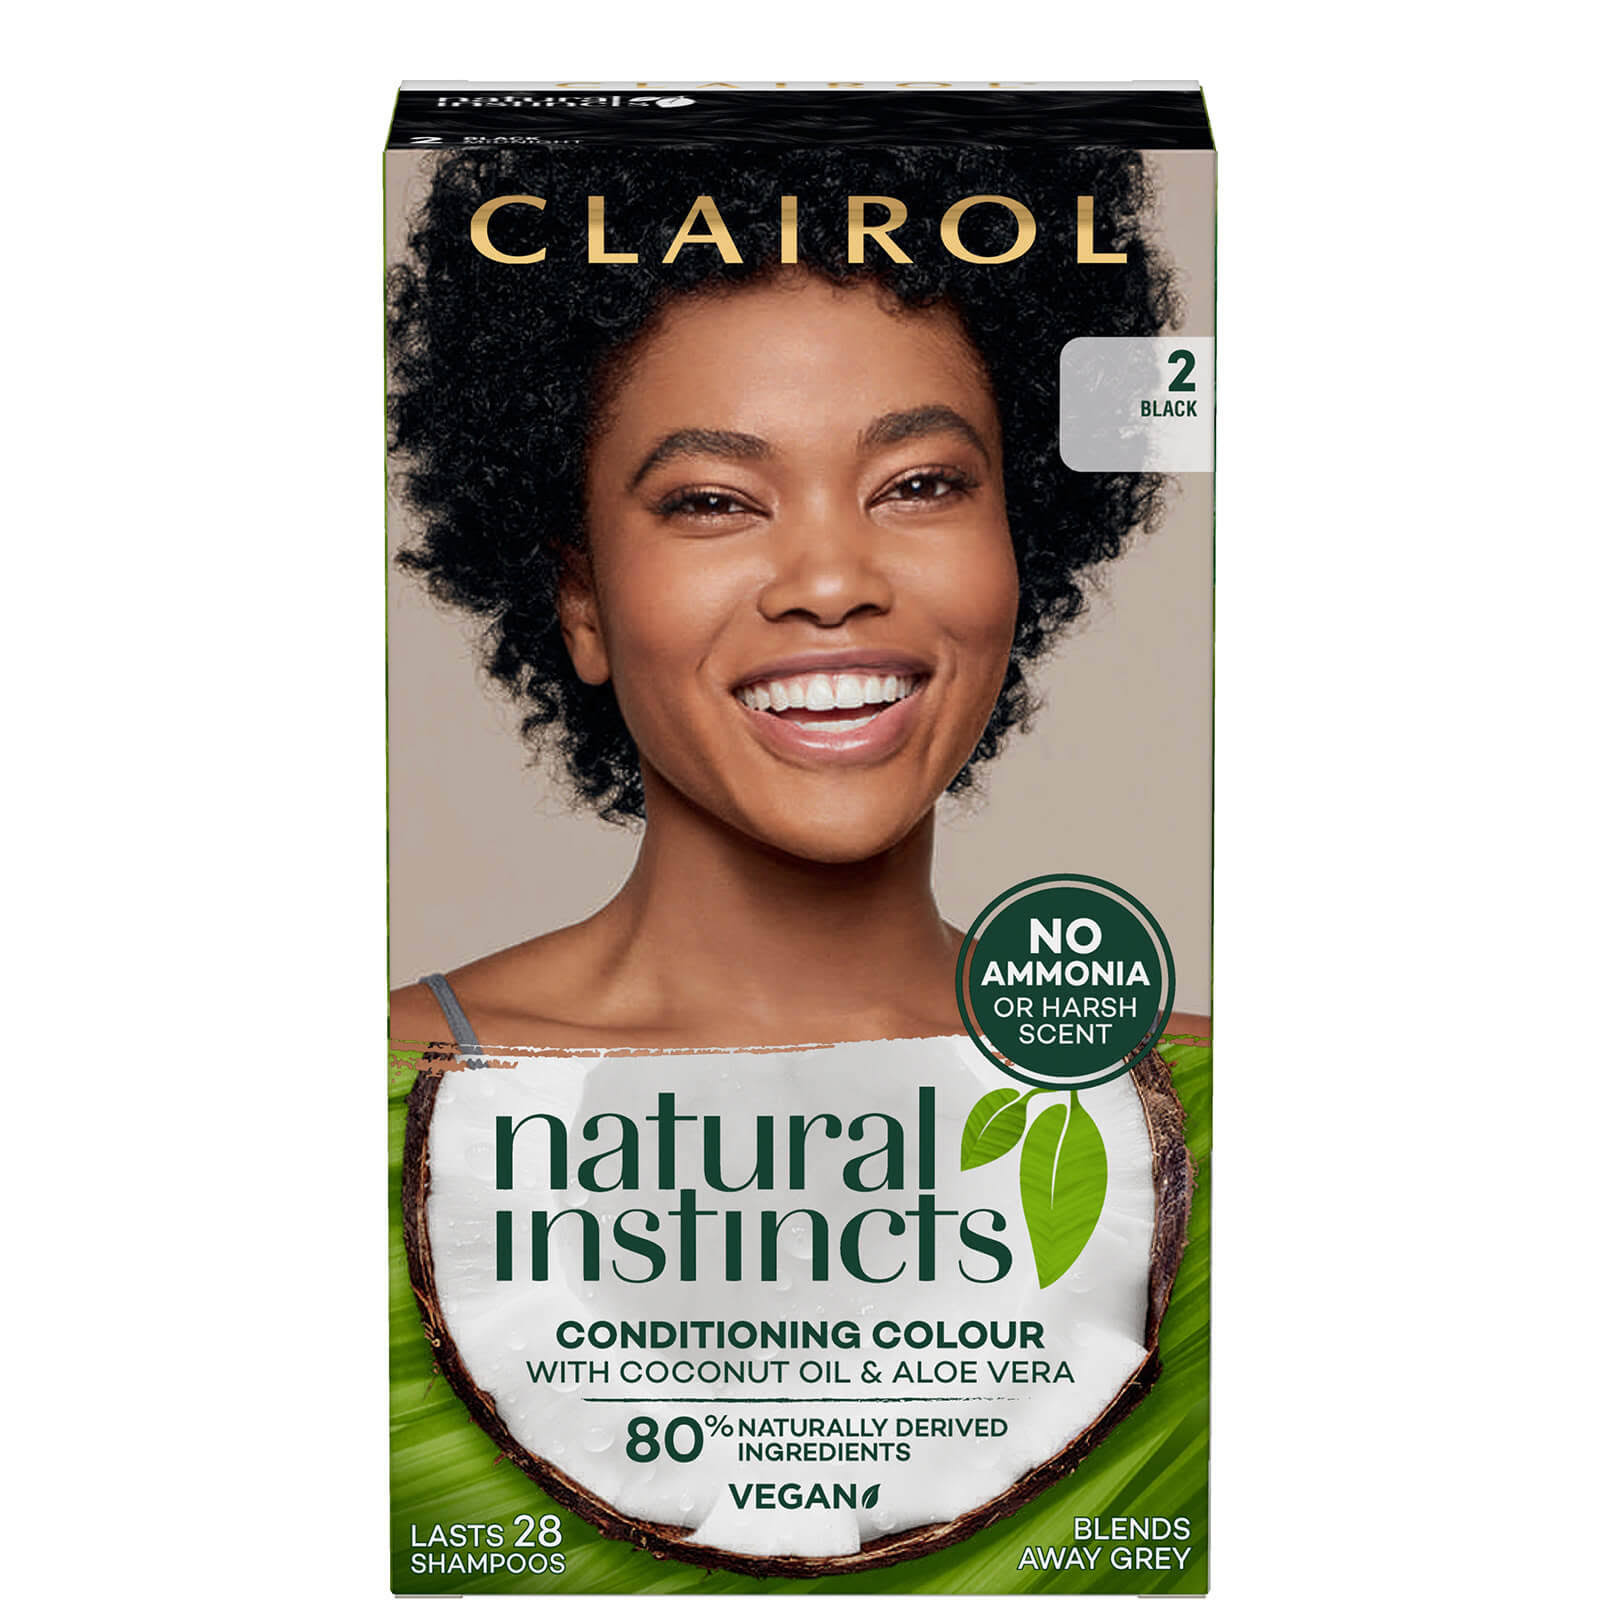 Clairol Natural Instincts Semi-Permanent No Ammonia Vegan Hair Dye, 2 Black, 177 ml